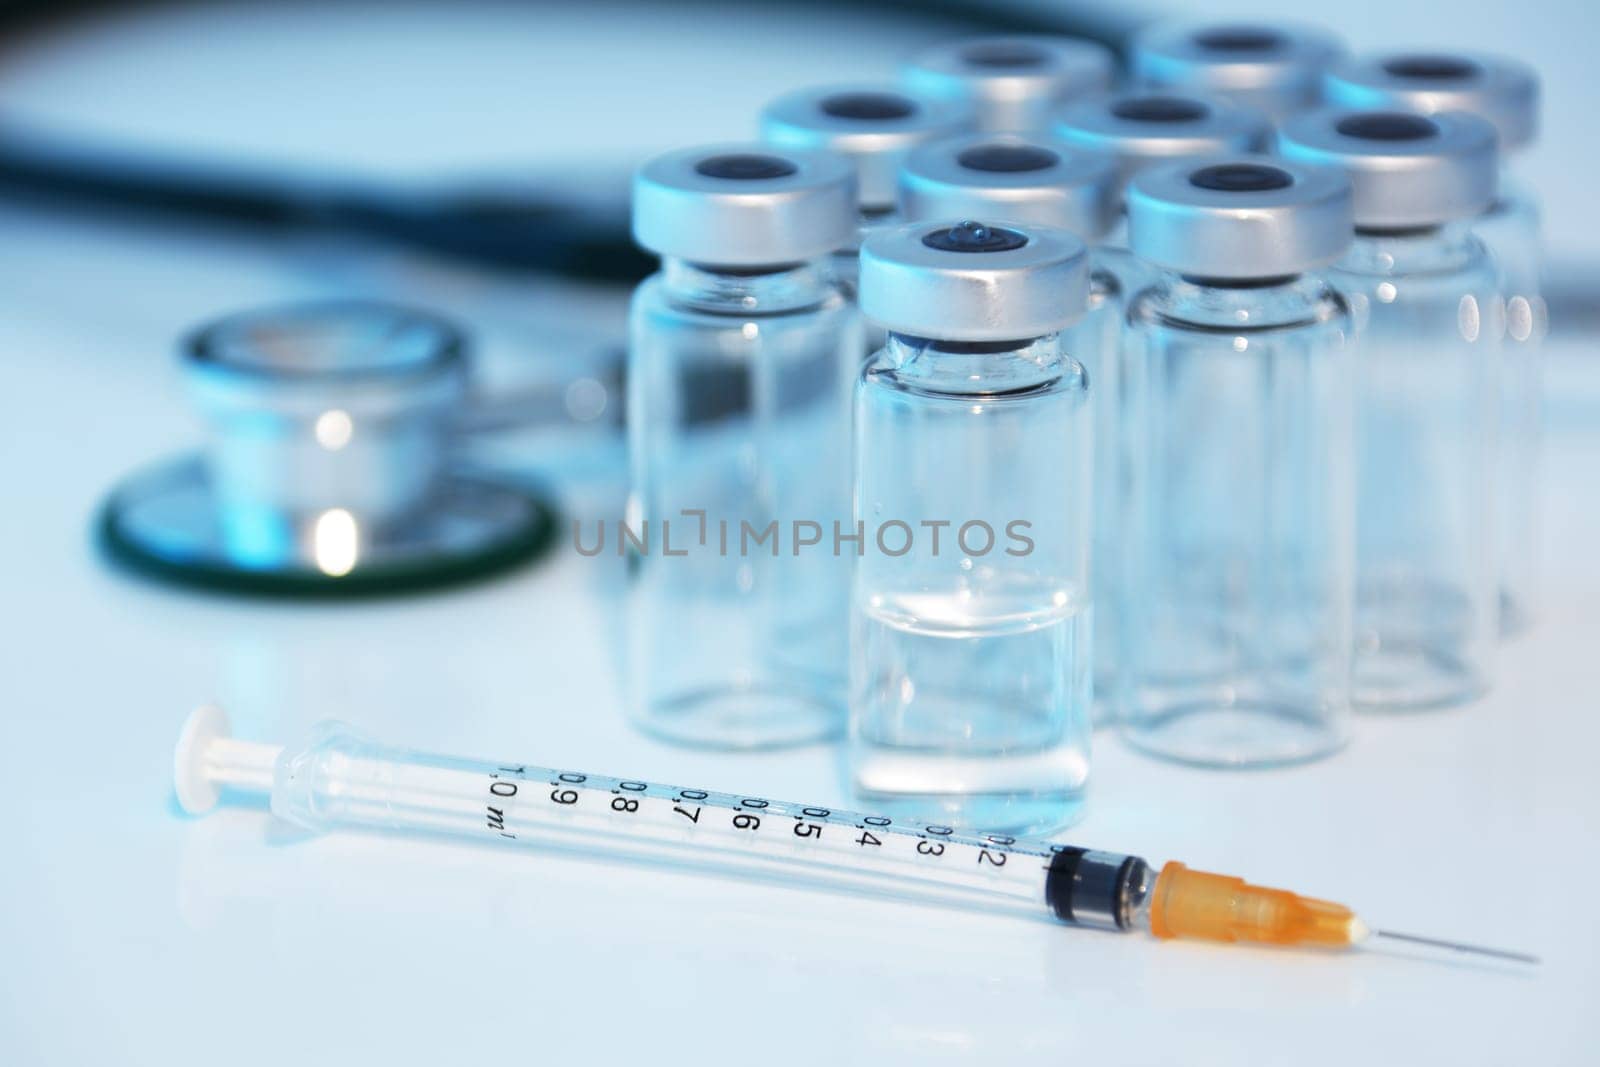 A medical syringe stethoscope and vaccine ampule bottles